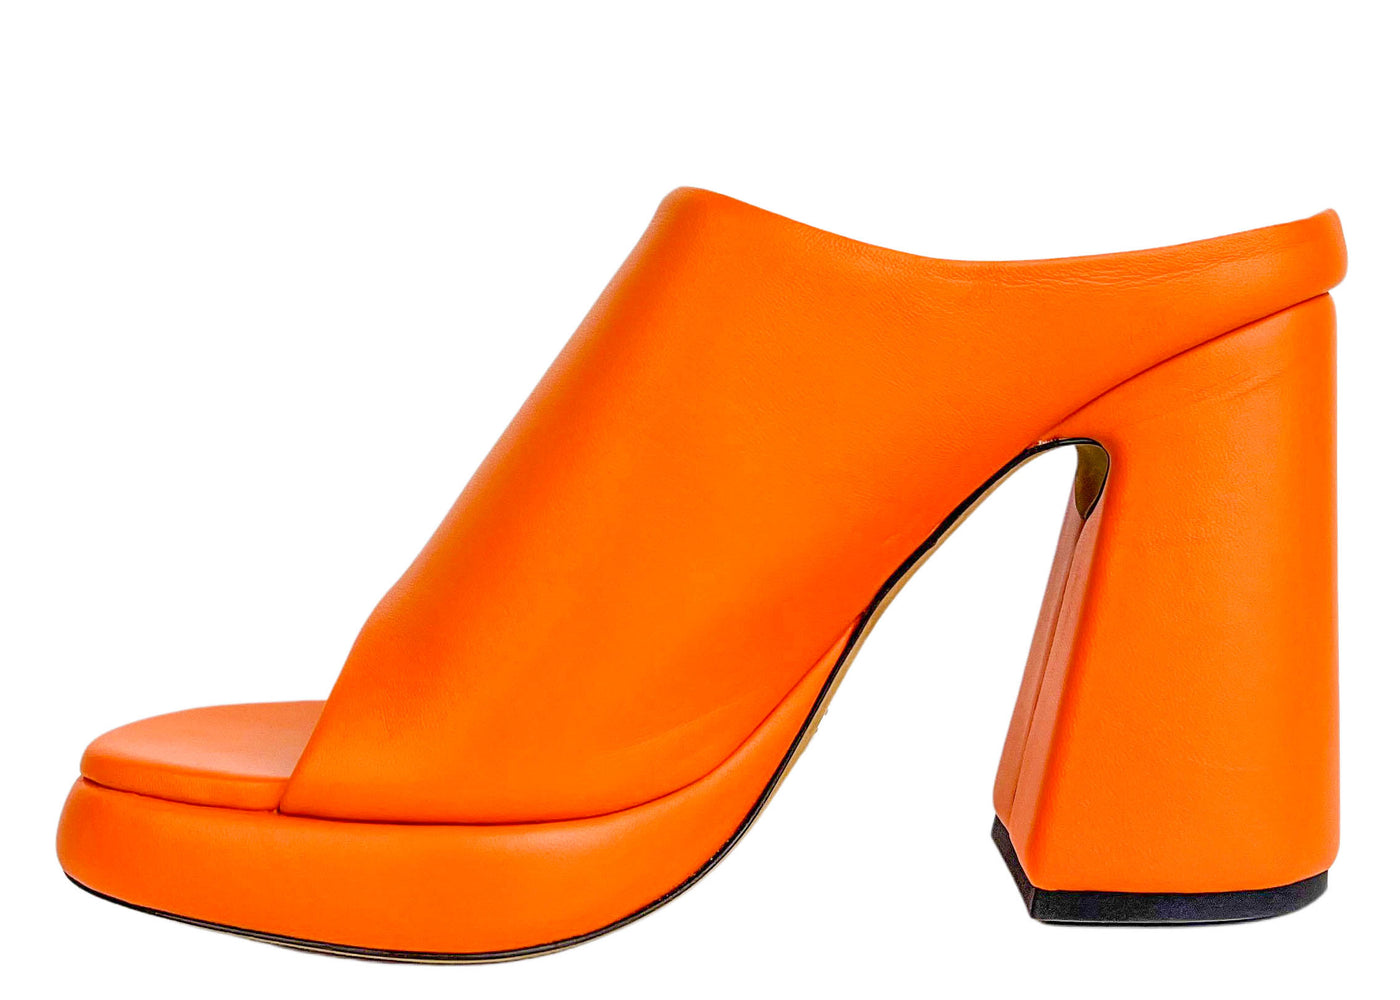 Proenza Schouler Forma Platform Shoes in Orange - Discounts on Proenza Schouler at UAL